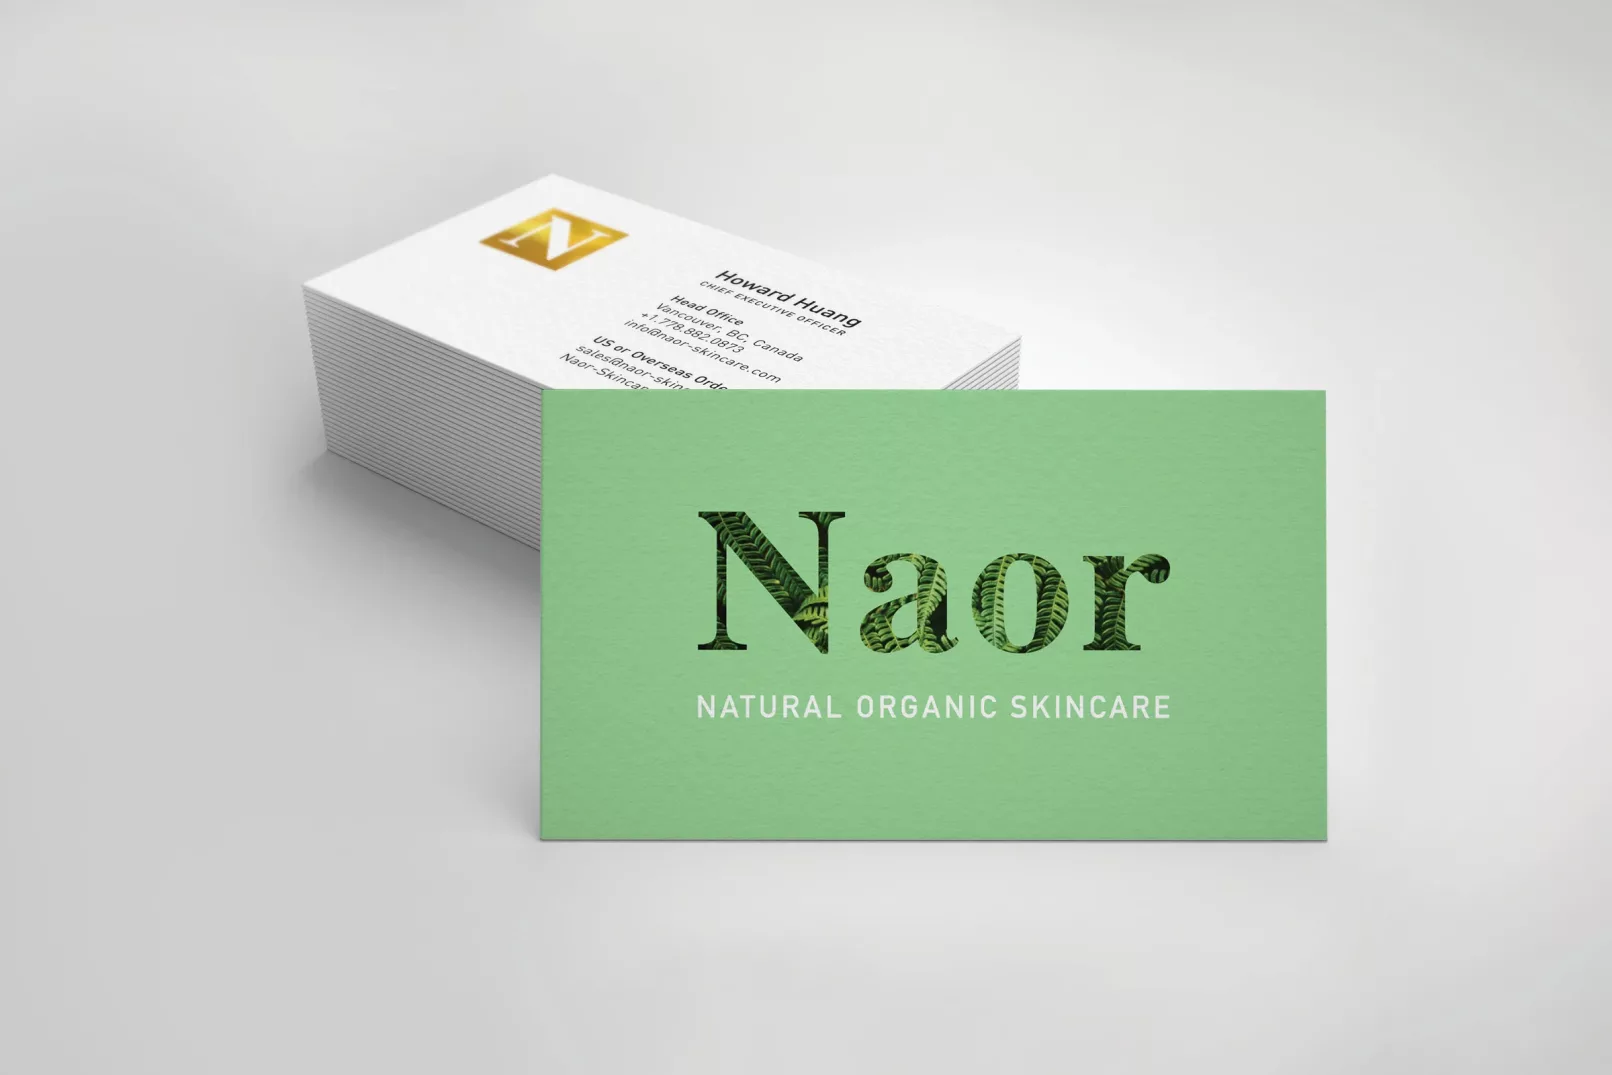 Naor Skincare